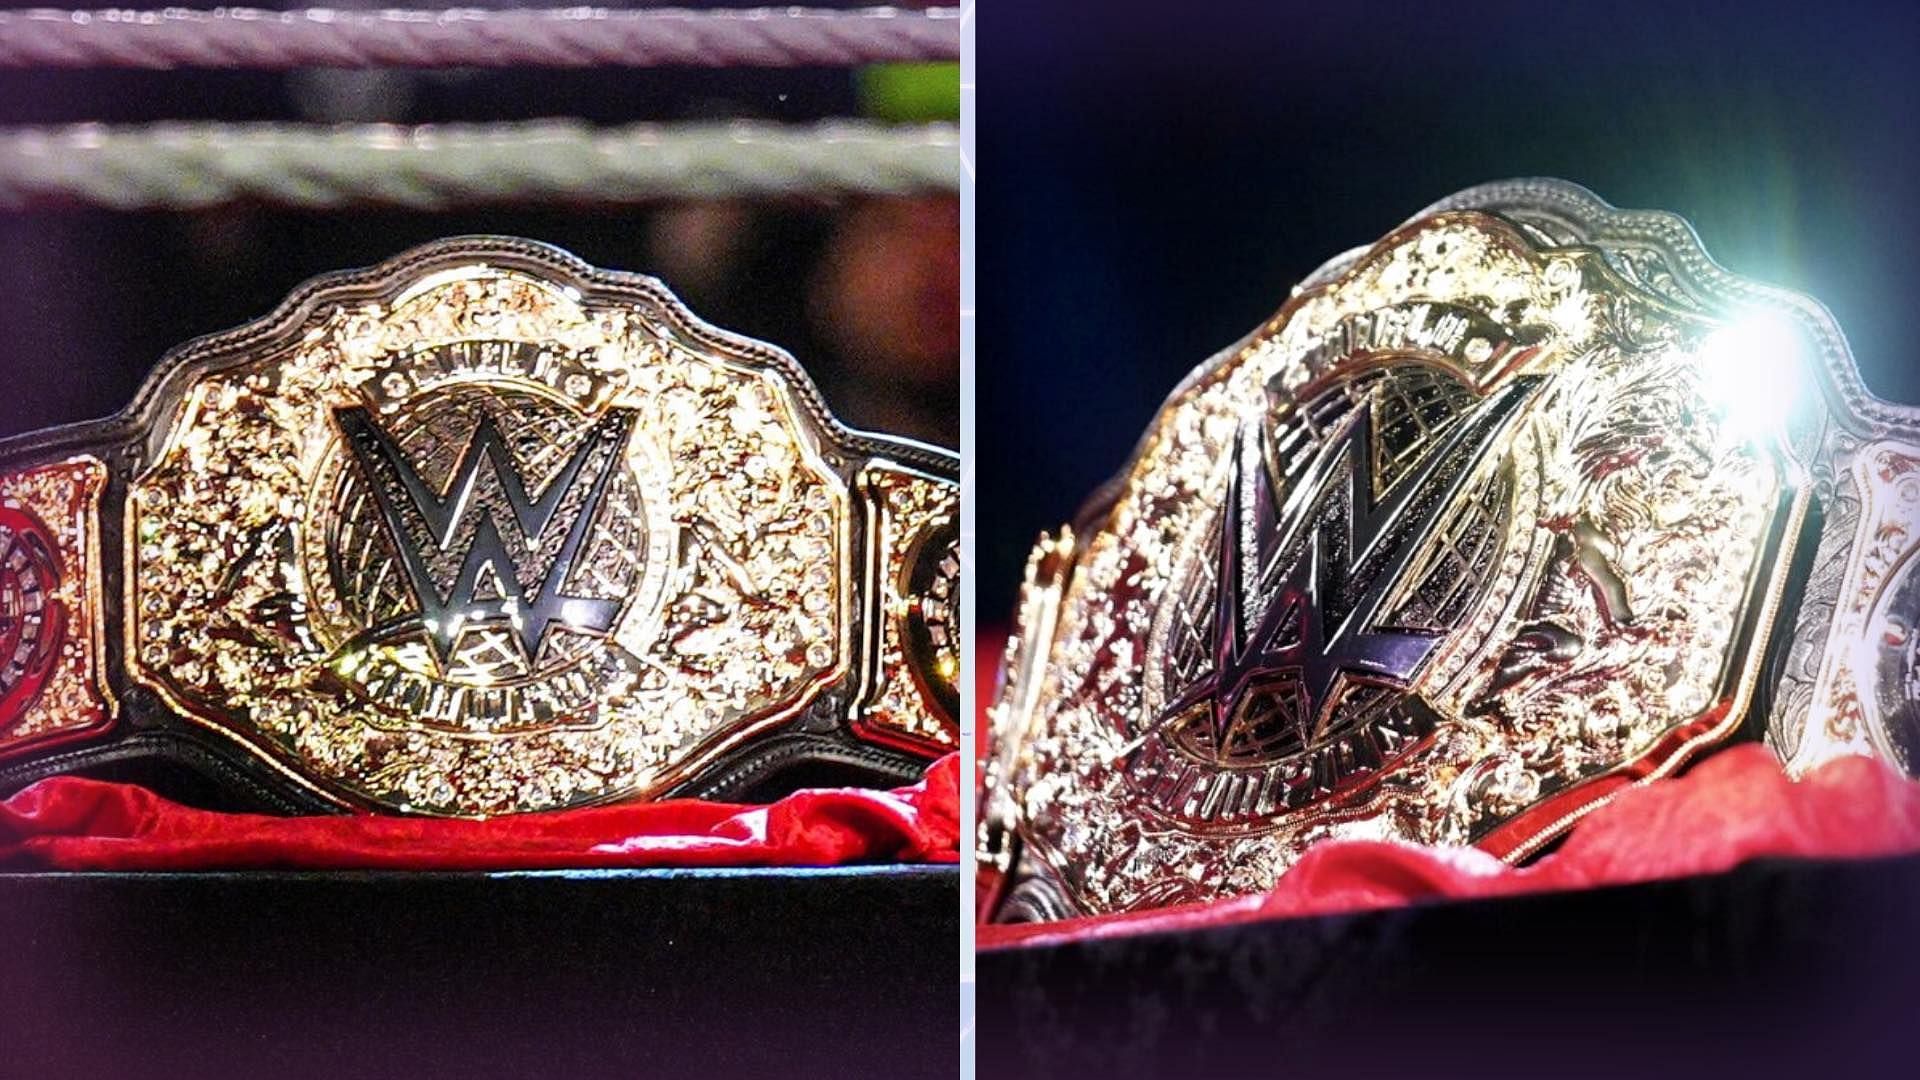 On WWE RAW, a new world heavweight championship belt was revealed.